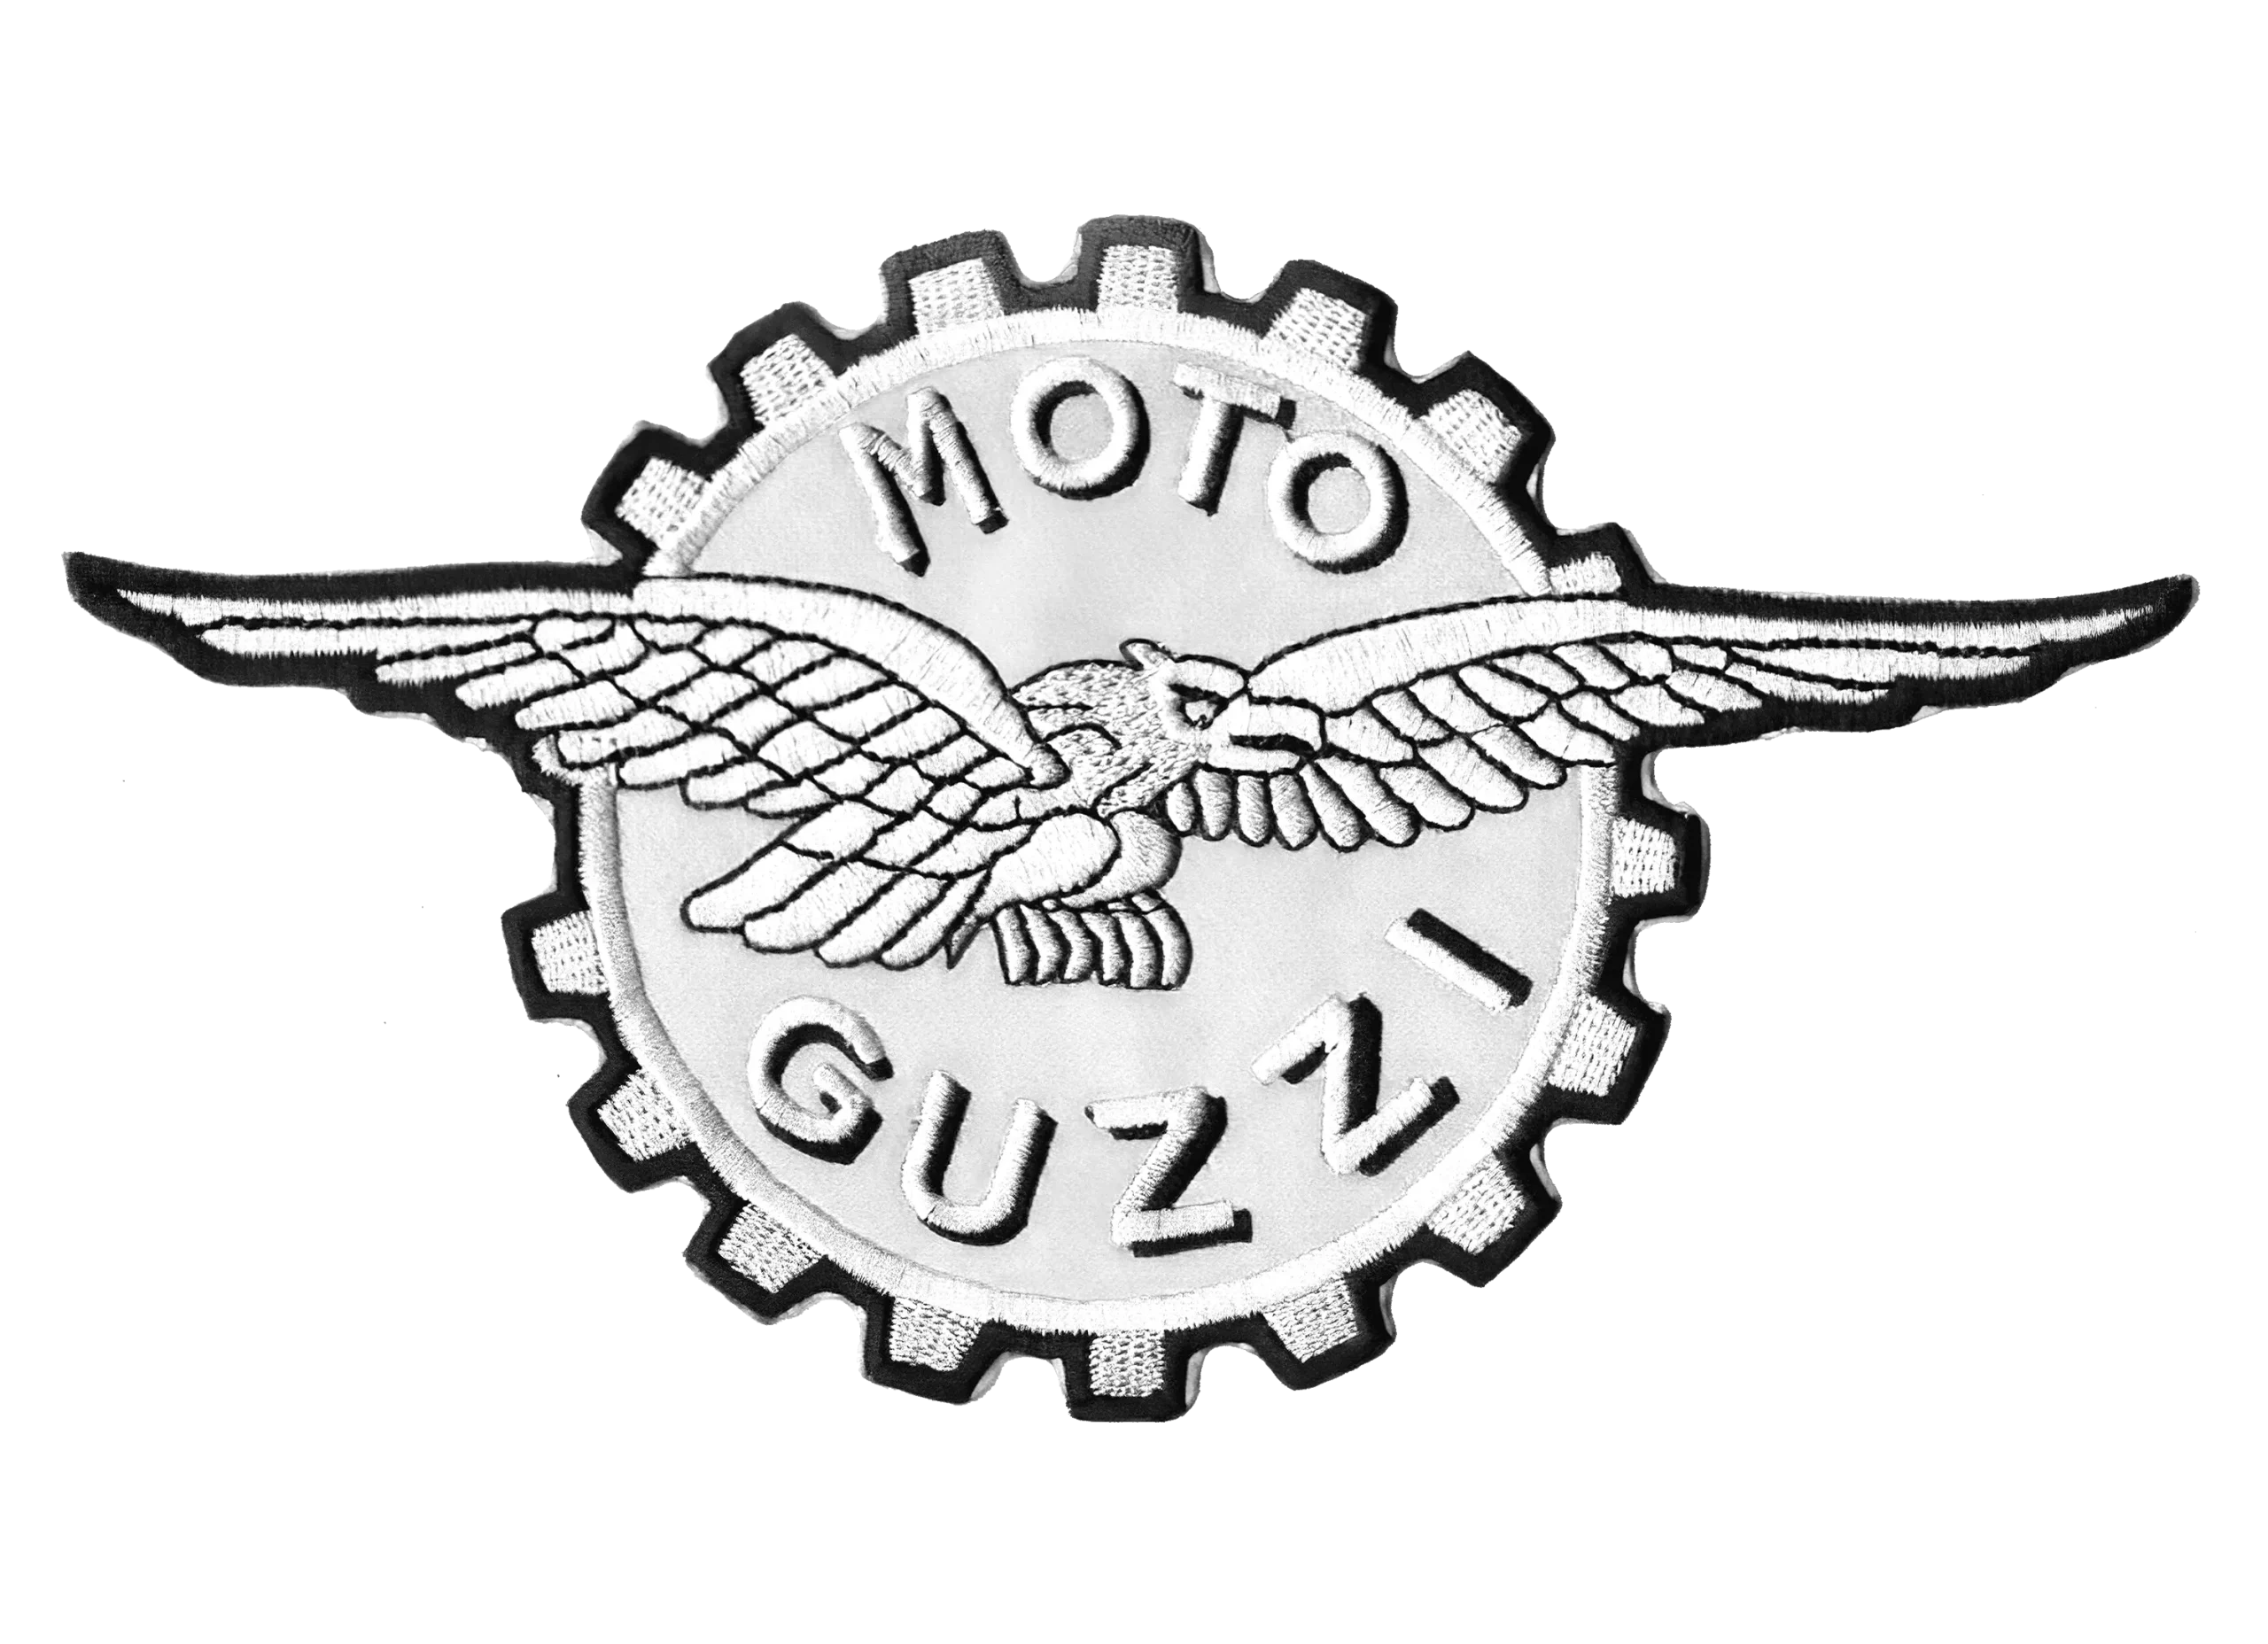 Moto Guzzi logo 1957-1958